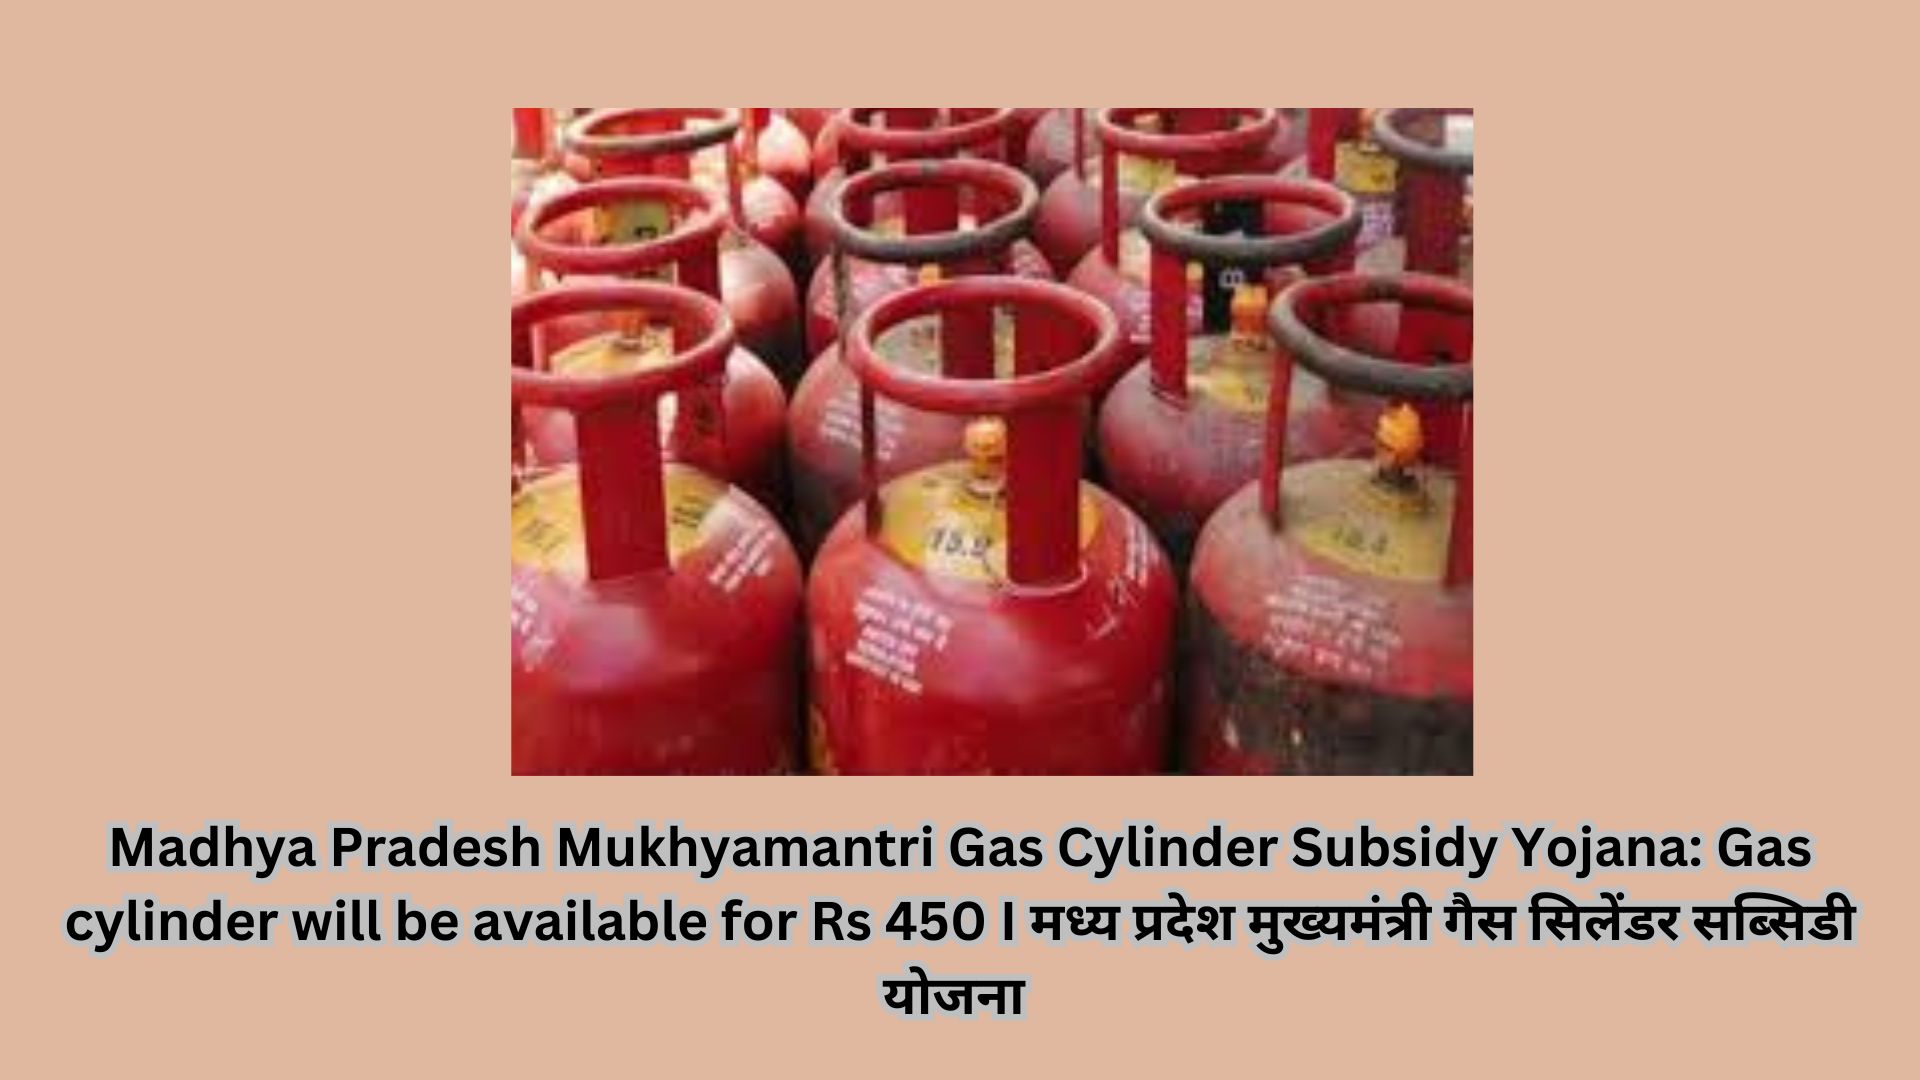 Madhya Pradesh Mukhyamantri Gas Cylinder Subsidy Yojana: Gas cylinder will be available for Rs 450 I मध्य प्रदेश मुख्यमंत्री गैस सिलेंडर सब्सिडी योजना